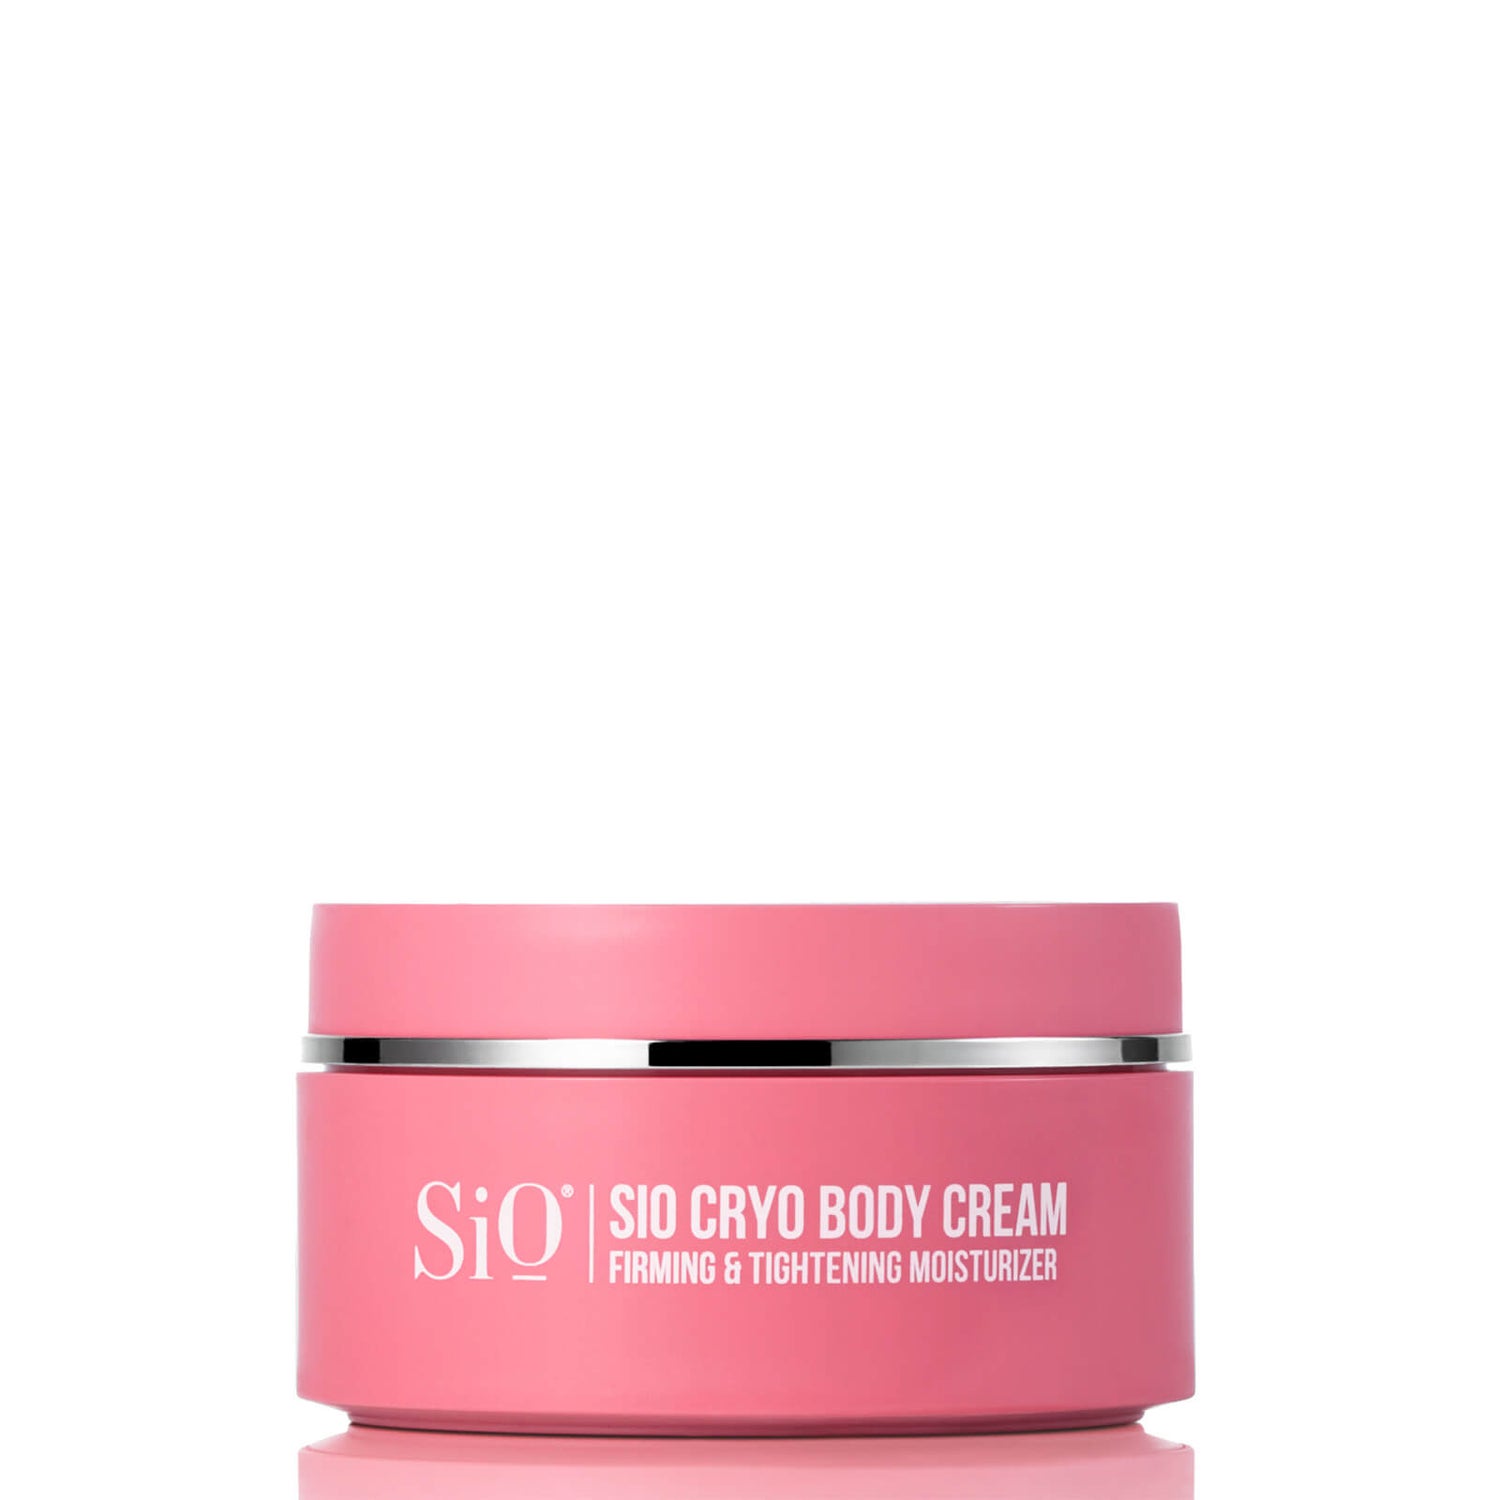 SiO Cryo Body Cream